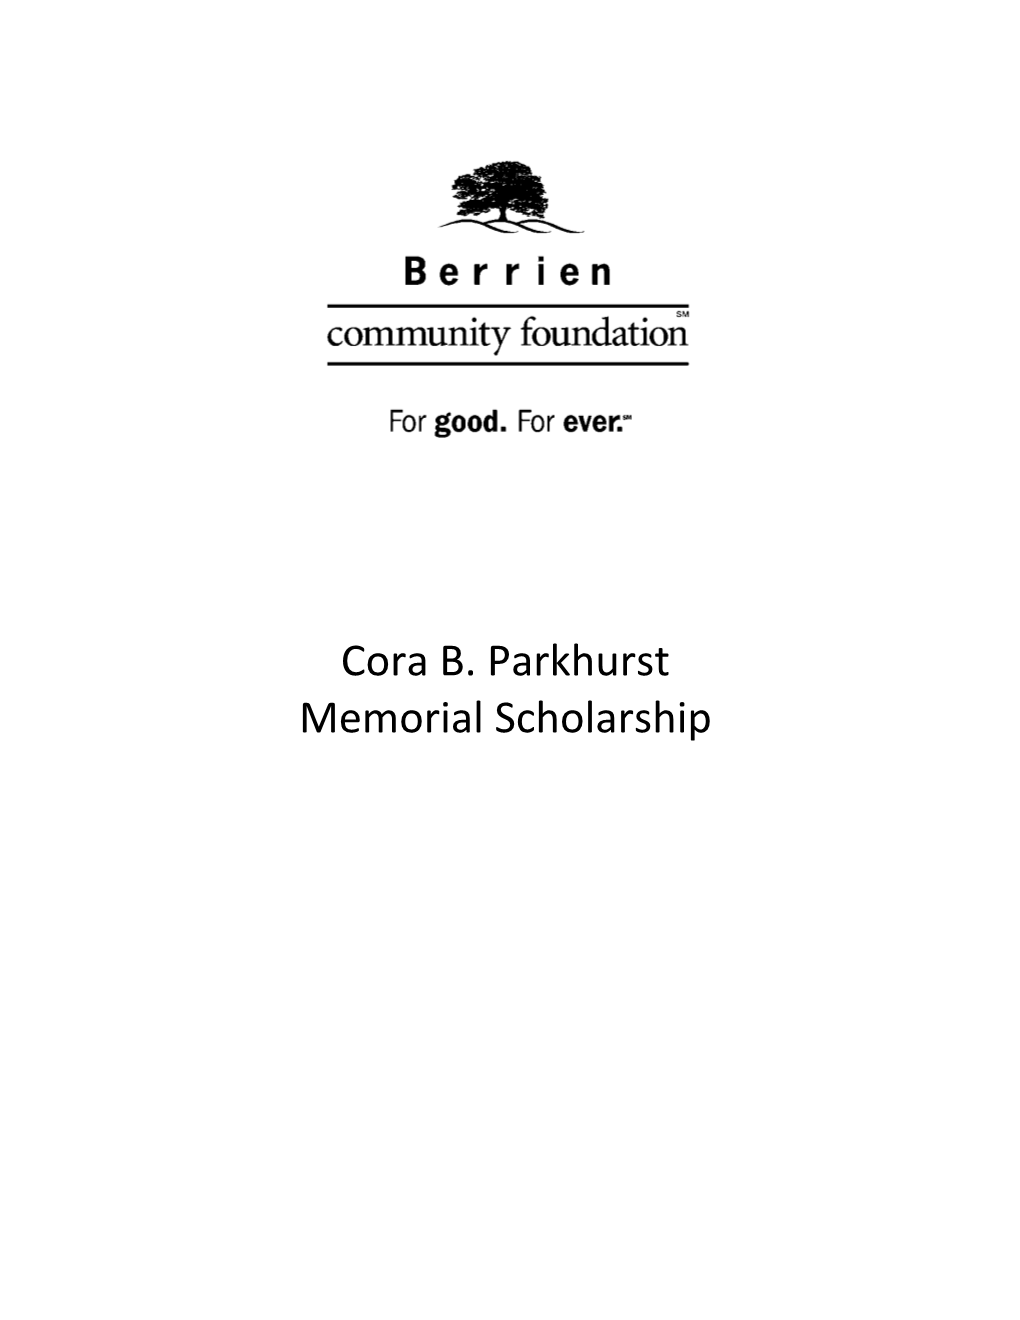 Cora B. Parkhurst Memorial Scholarship